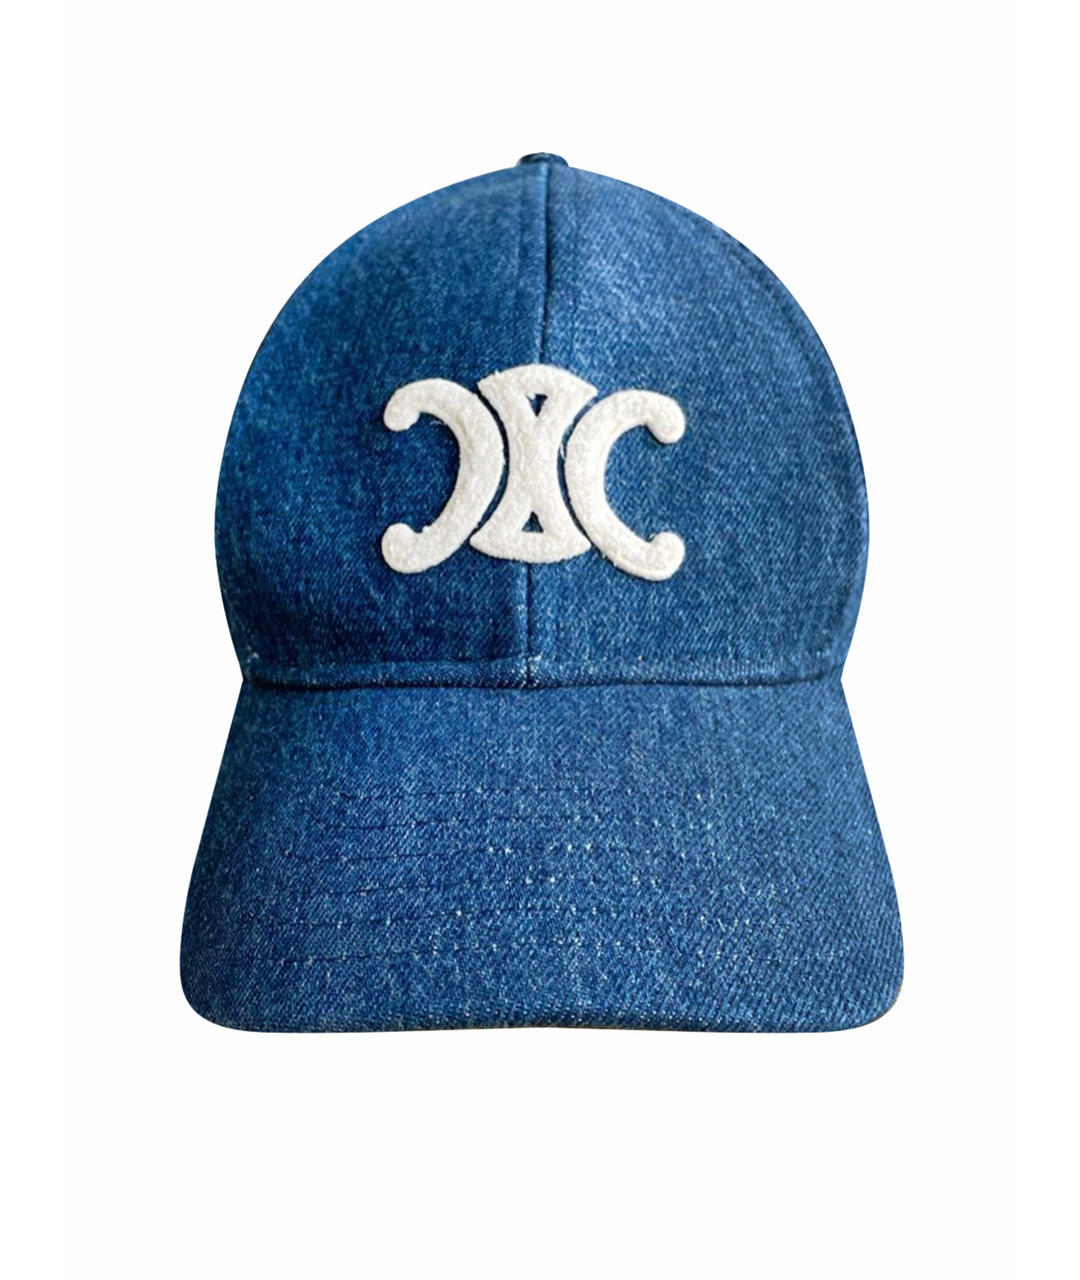 CELINE PRE-OWNED Синяя кепка/бейсболка, фото 1